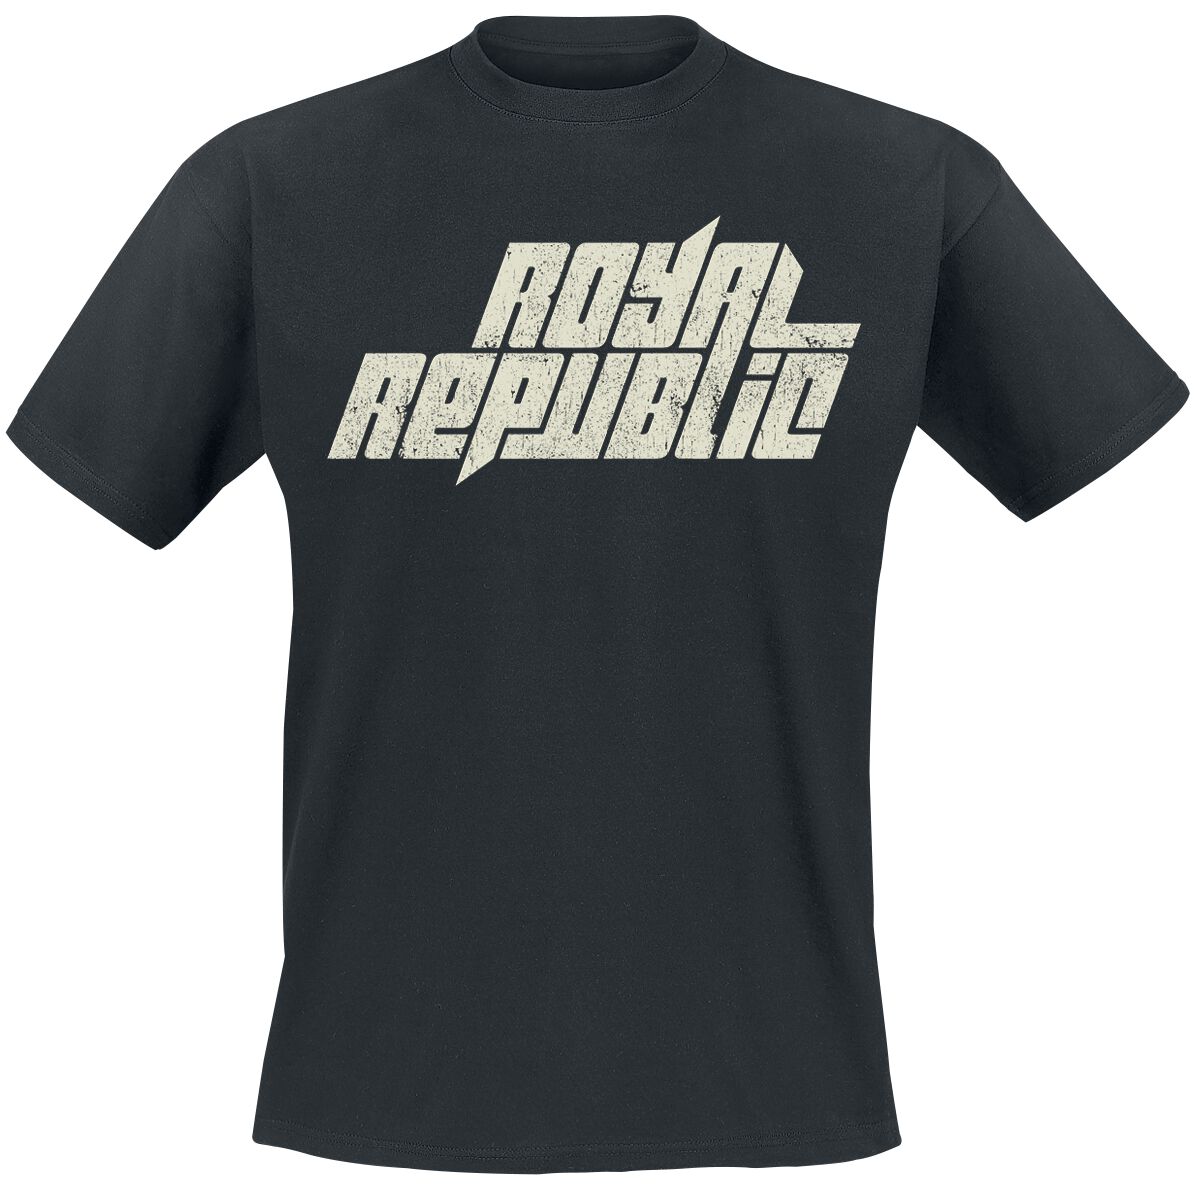 Royal Republic Vintage Logo T-Shirt schwarz in M